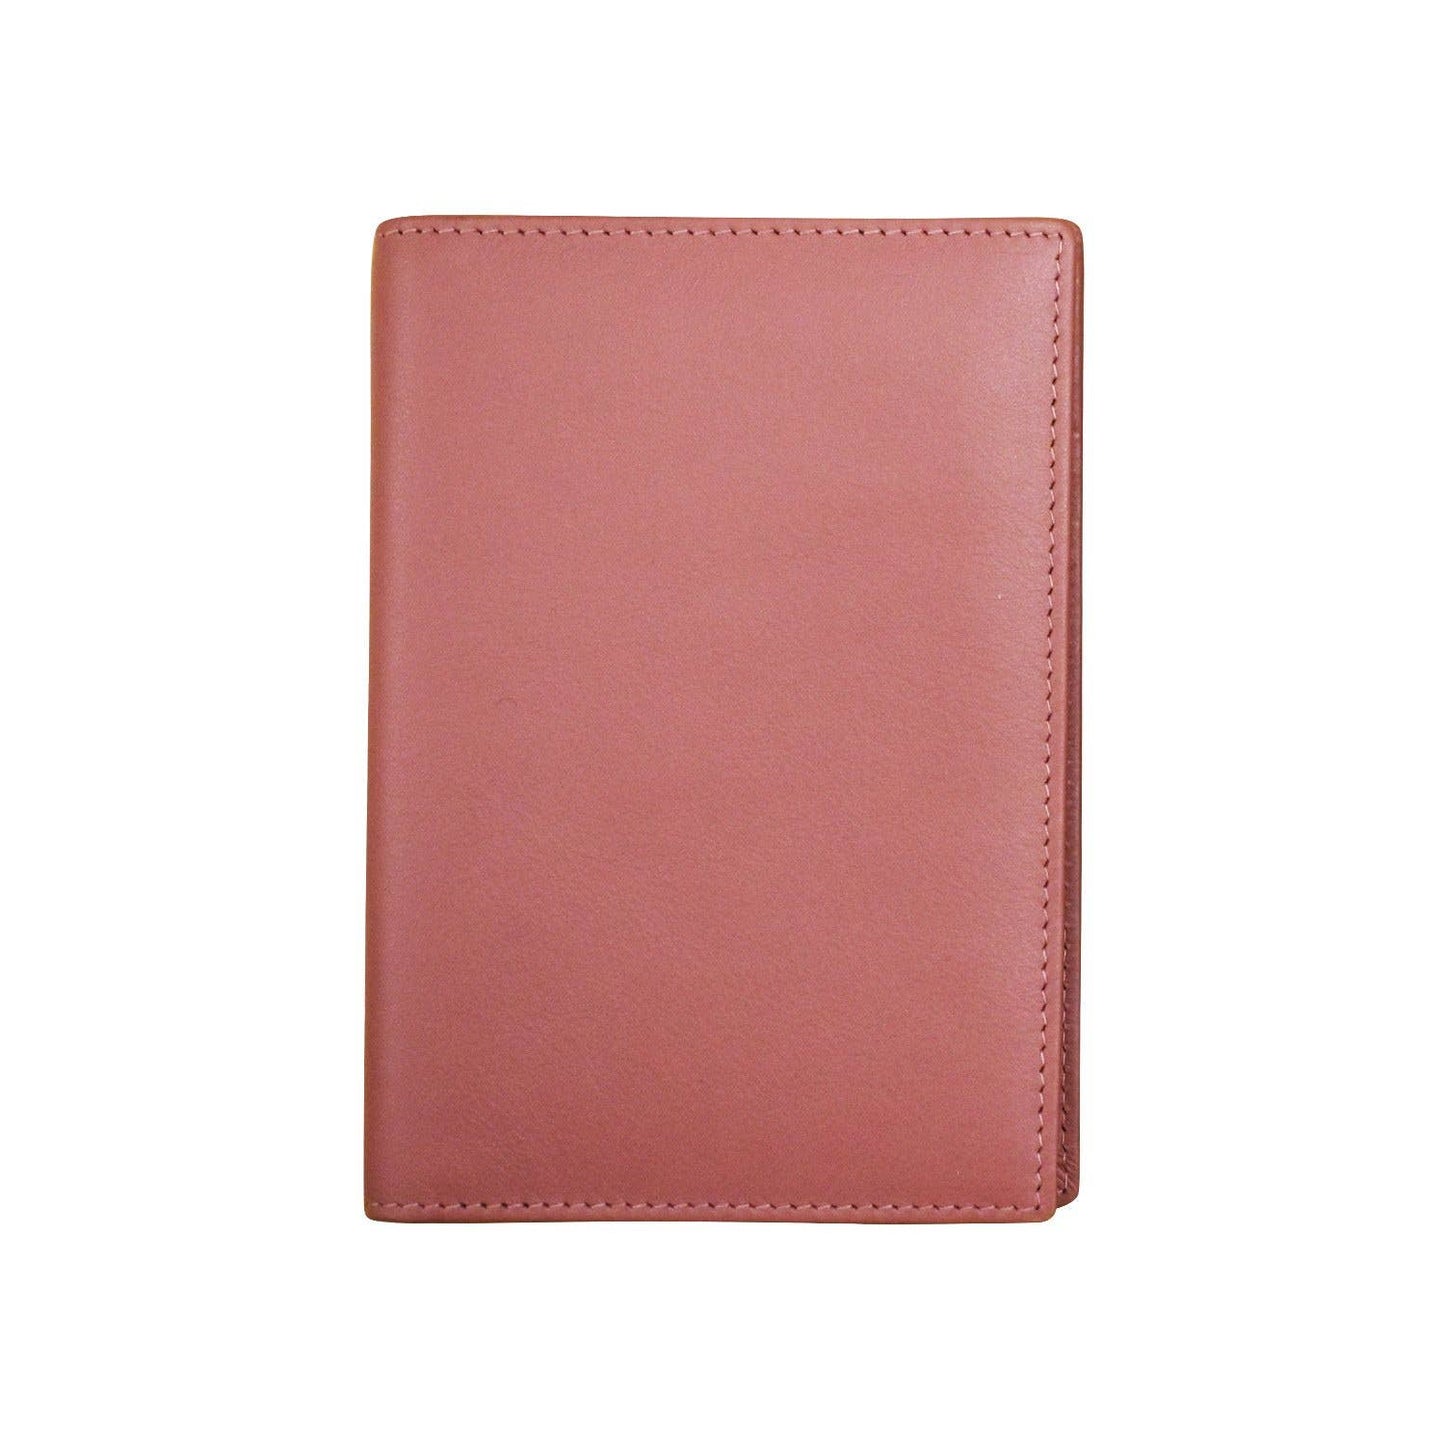 leather RFID passport case